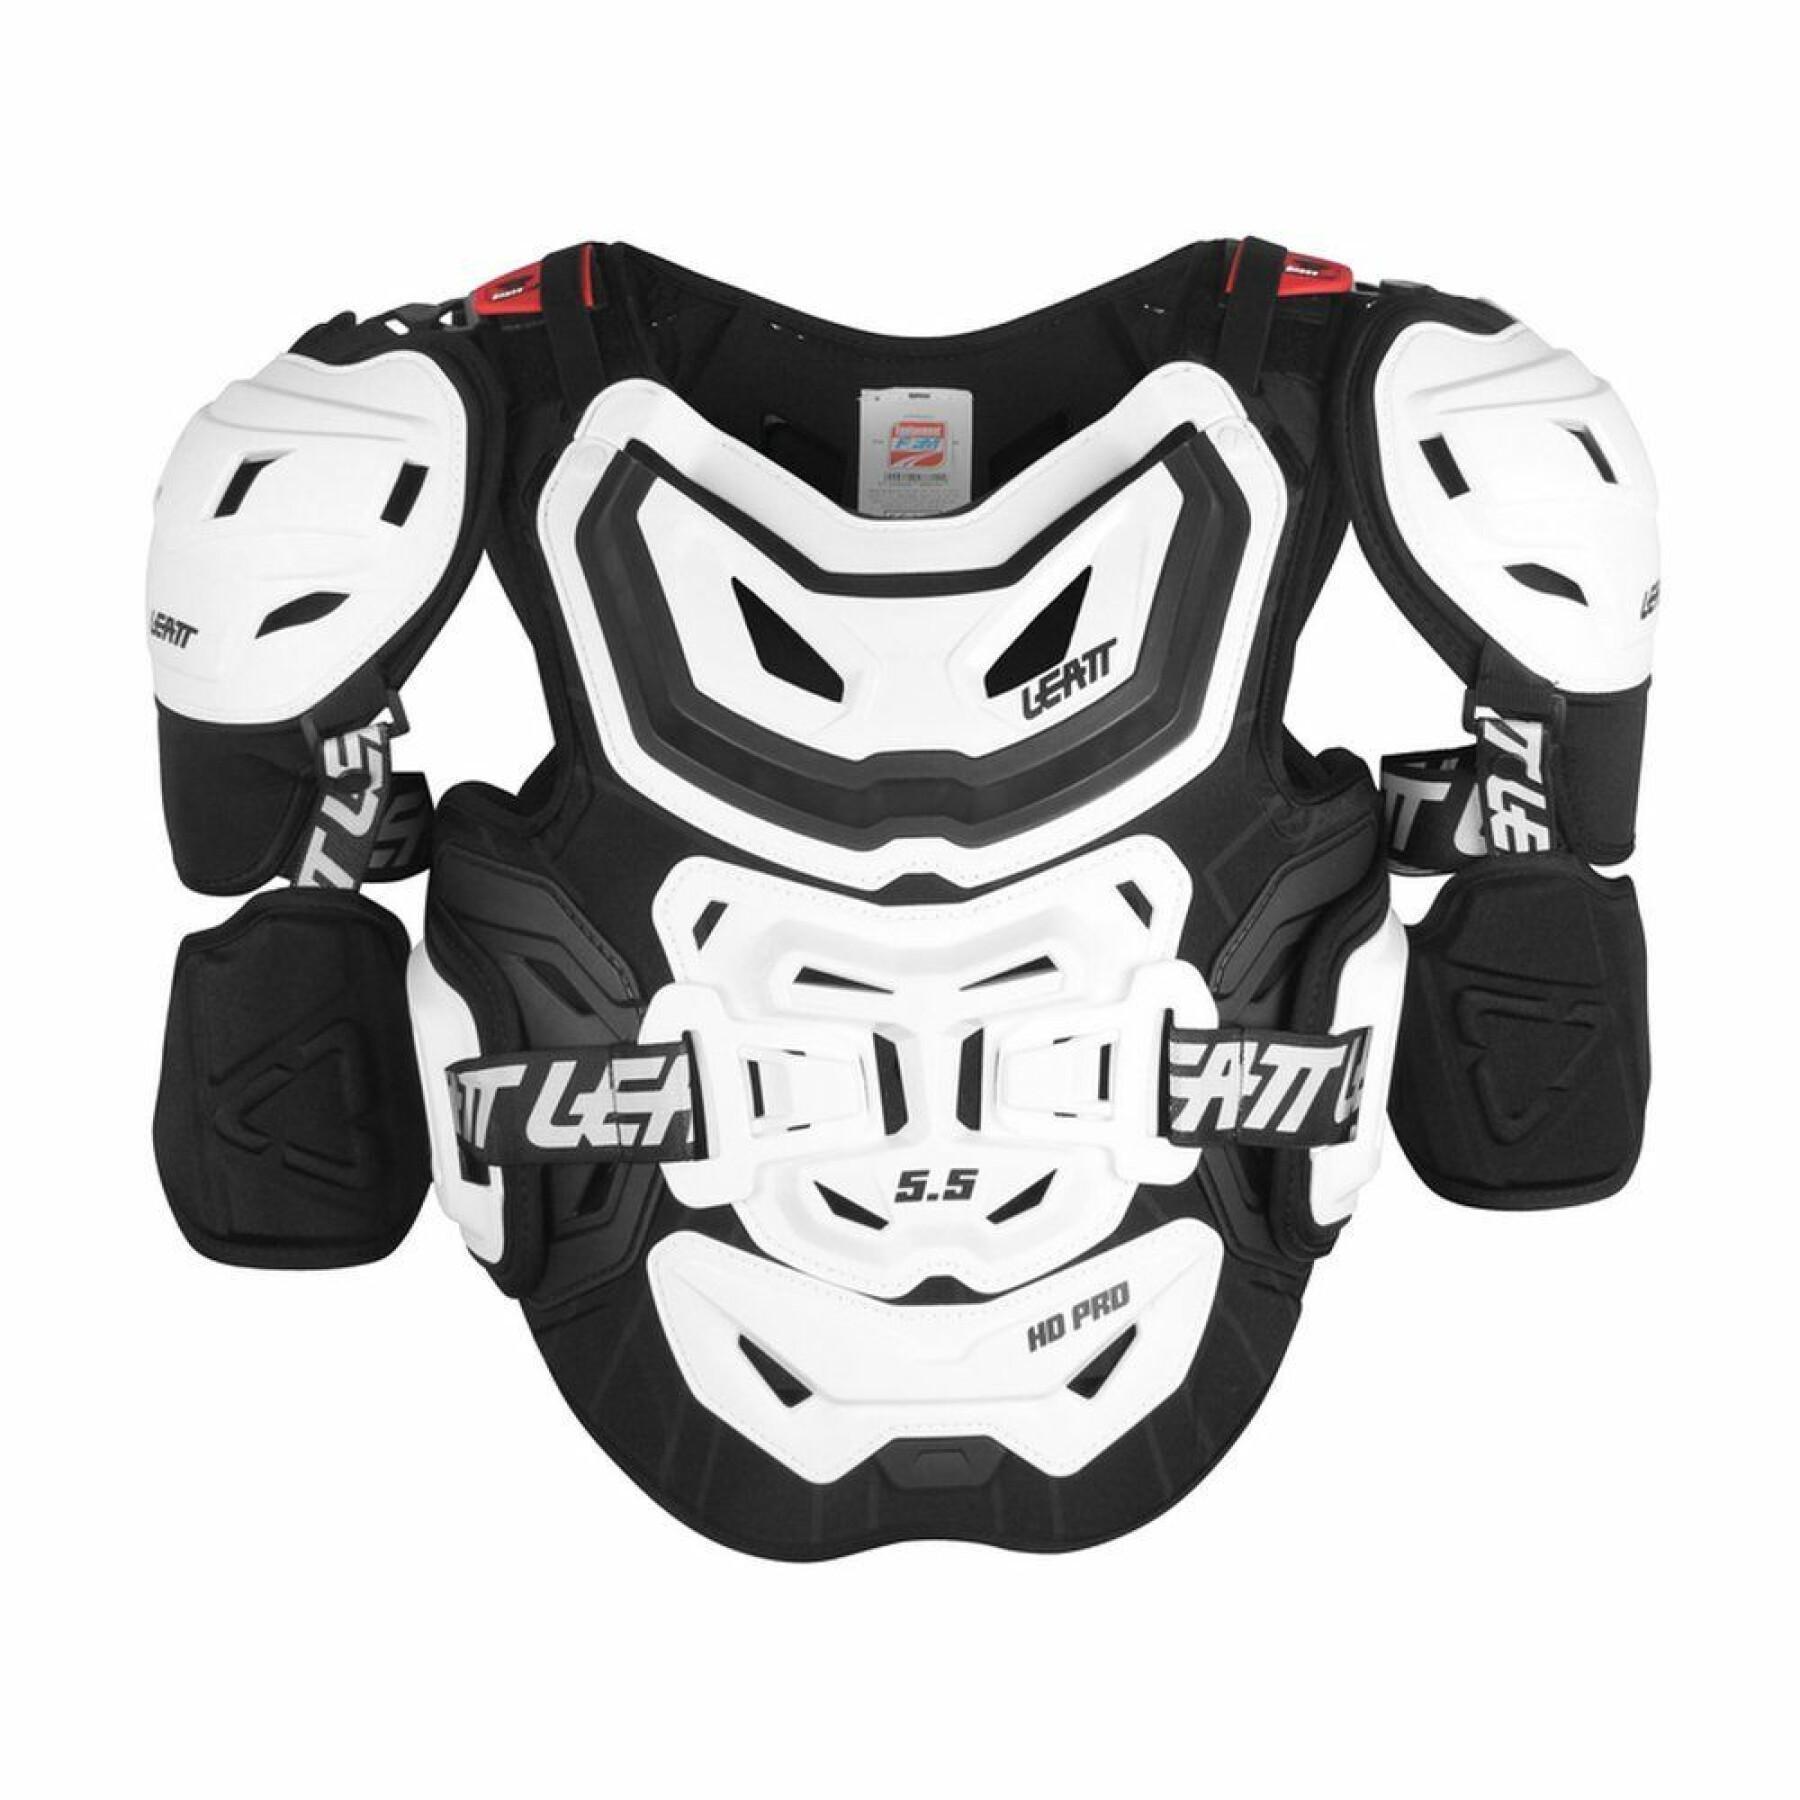 Leatt 5.5 Pro Chest Protector Motocross Dirtbike Offroad 